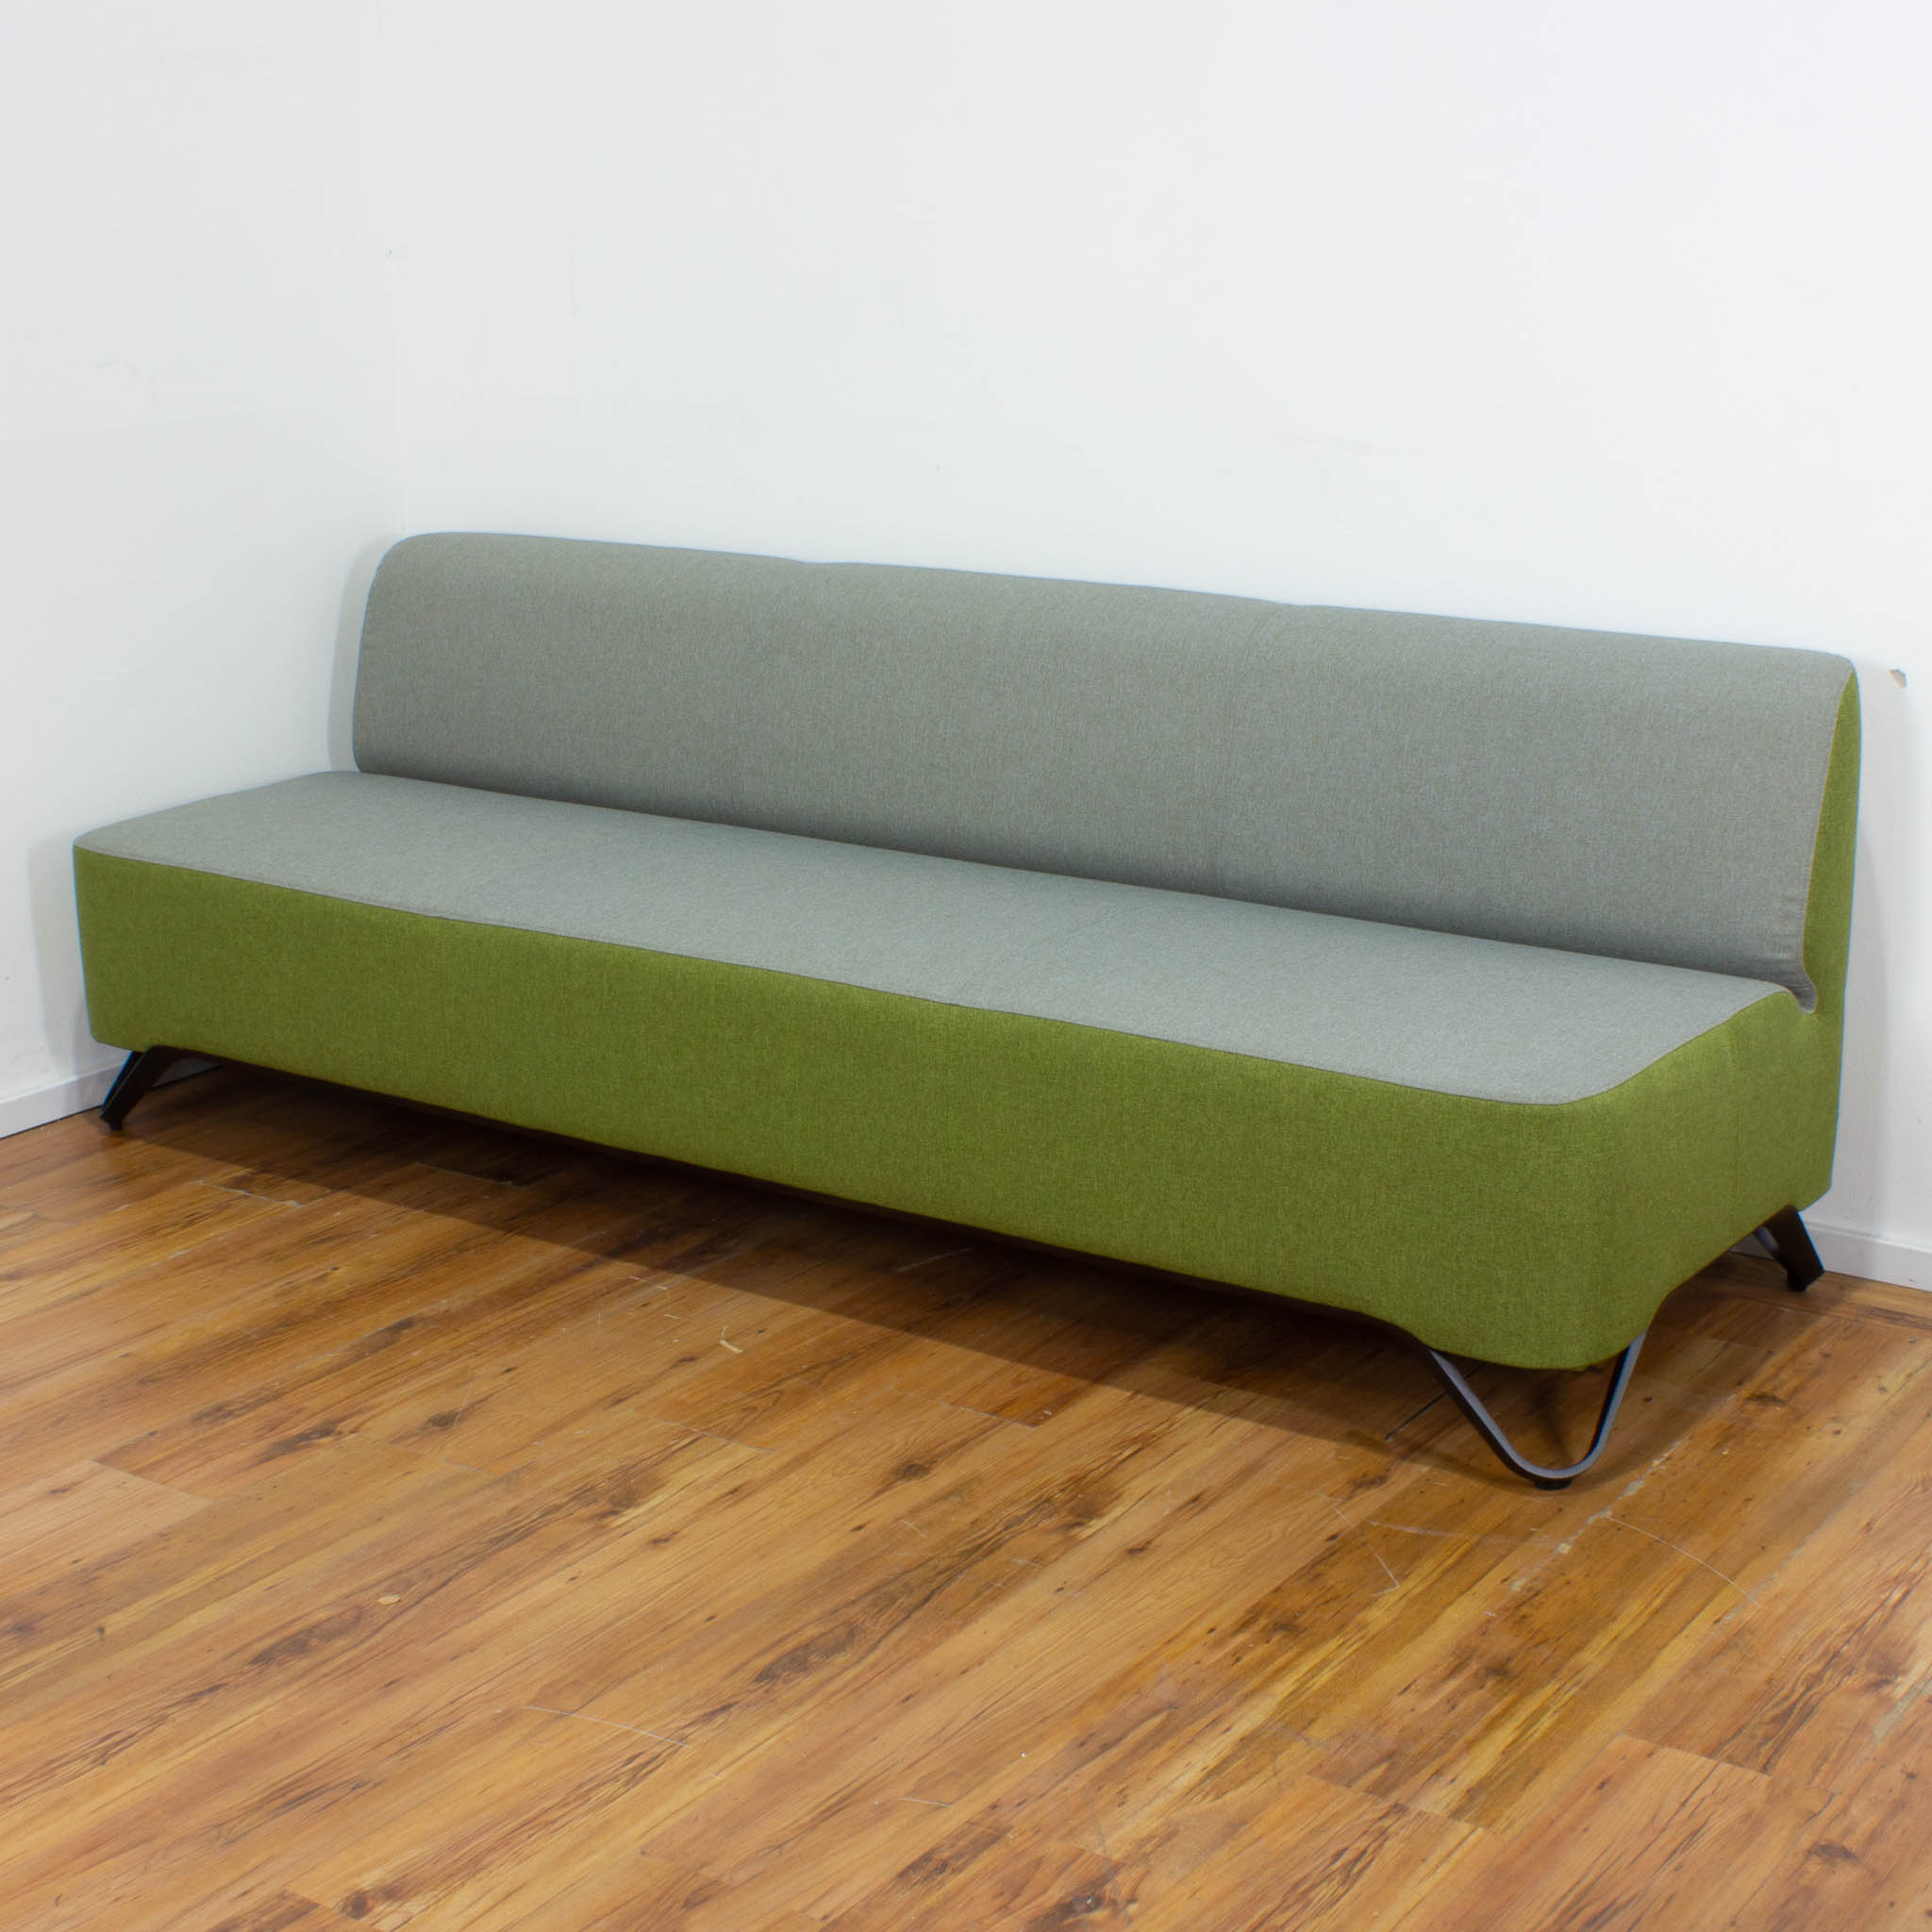 ProfiM "Softbox" 3-Sitzer Sofa - grün & grau